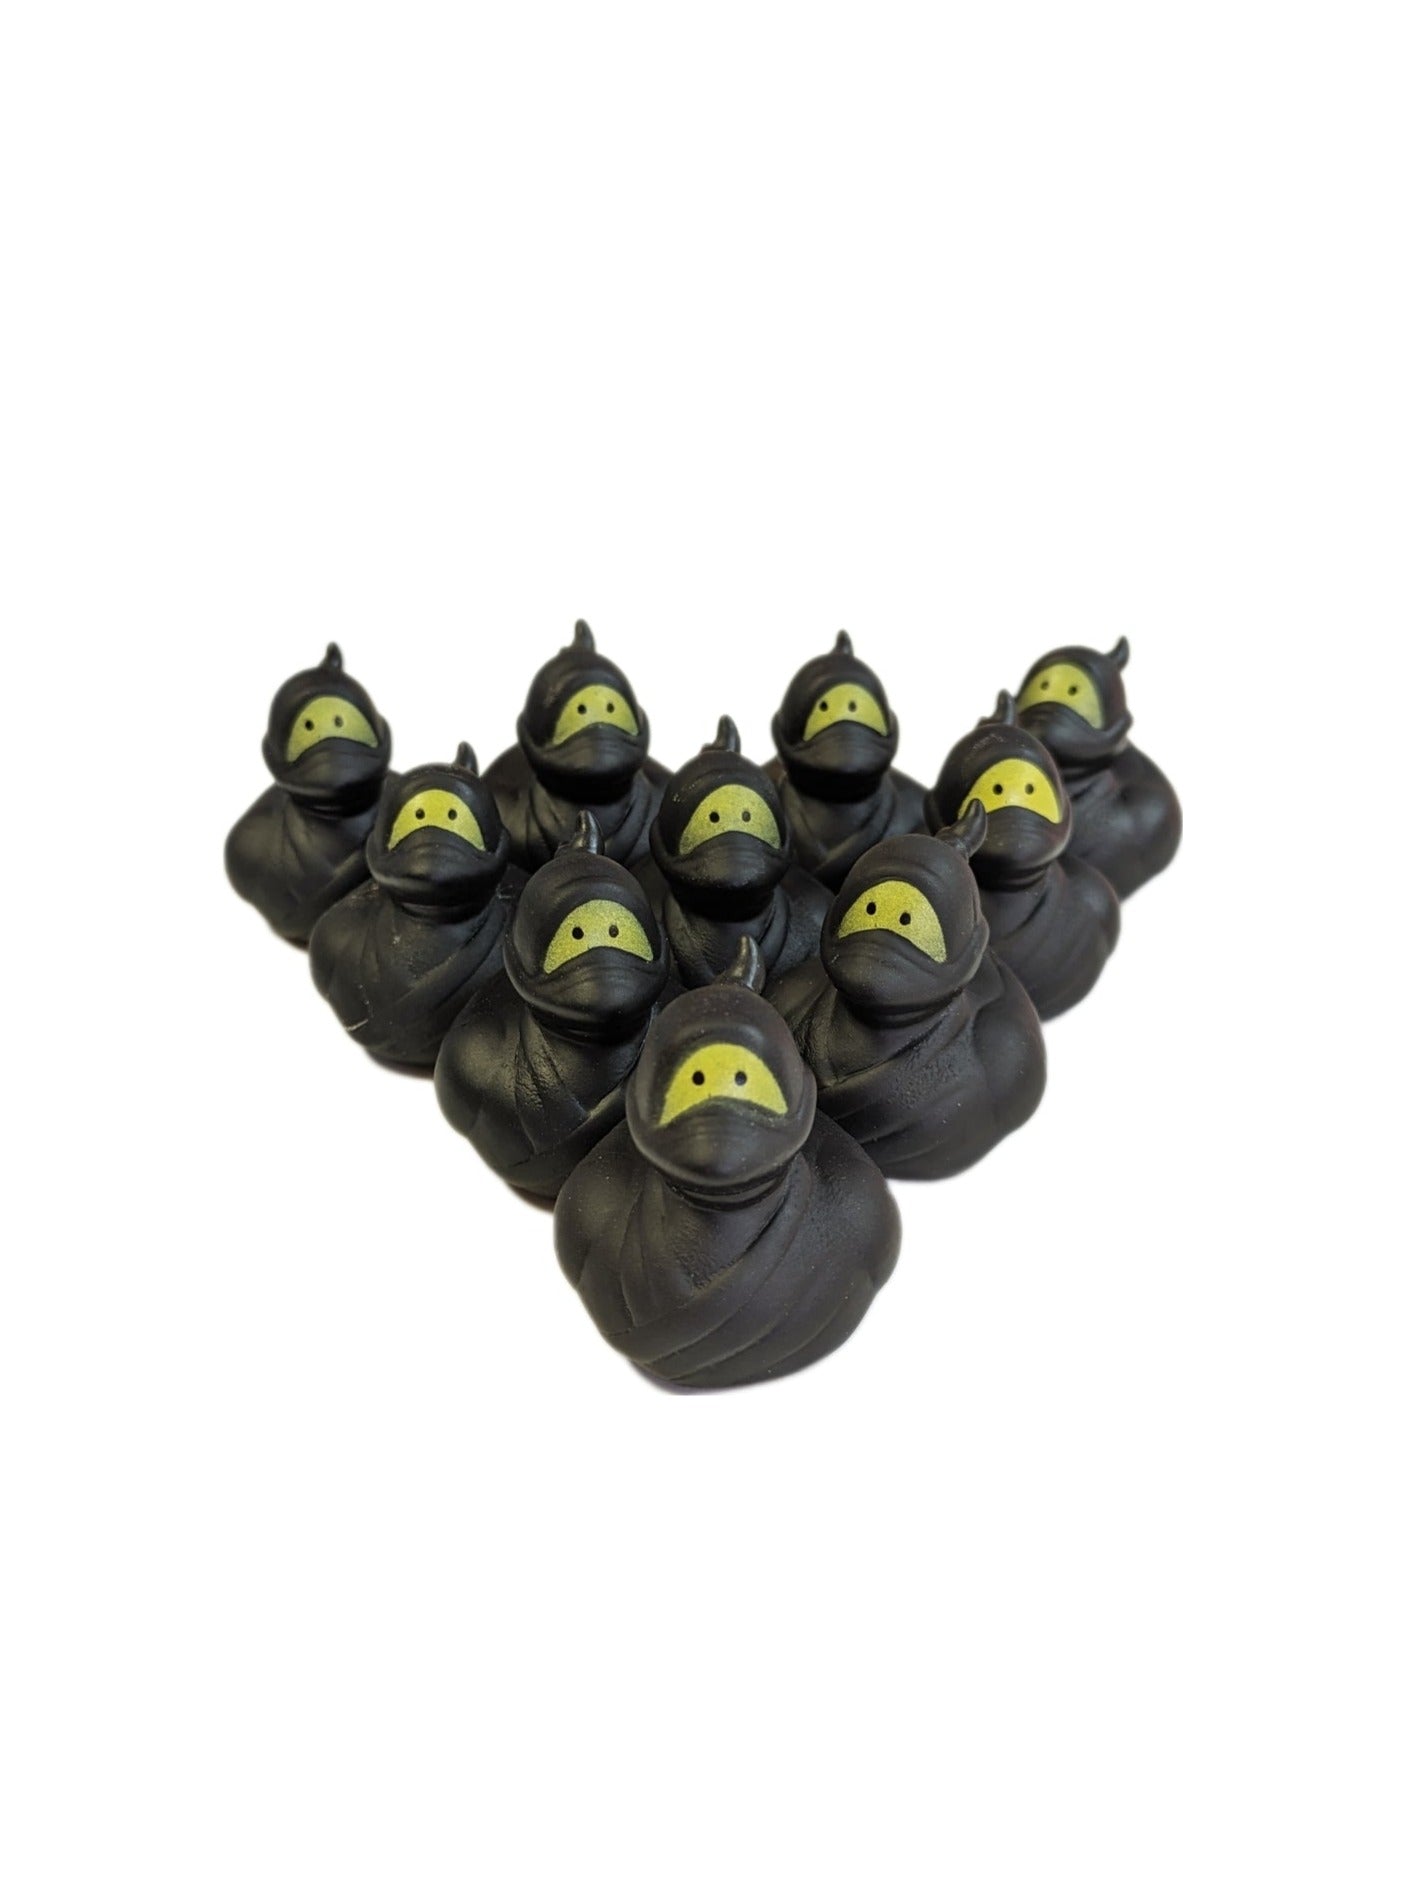 10 Black Ninjas- 2" Rubber Ducks